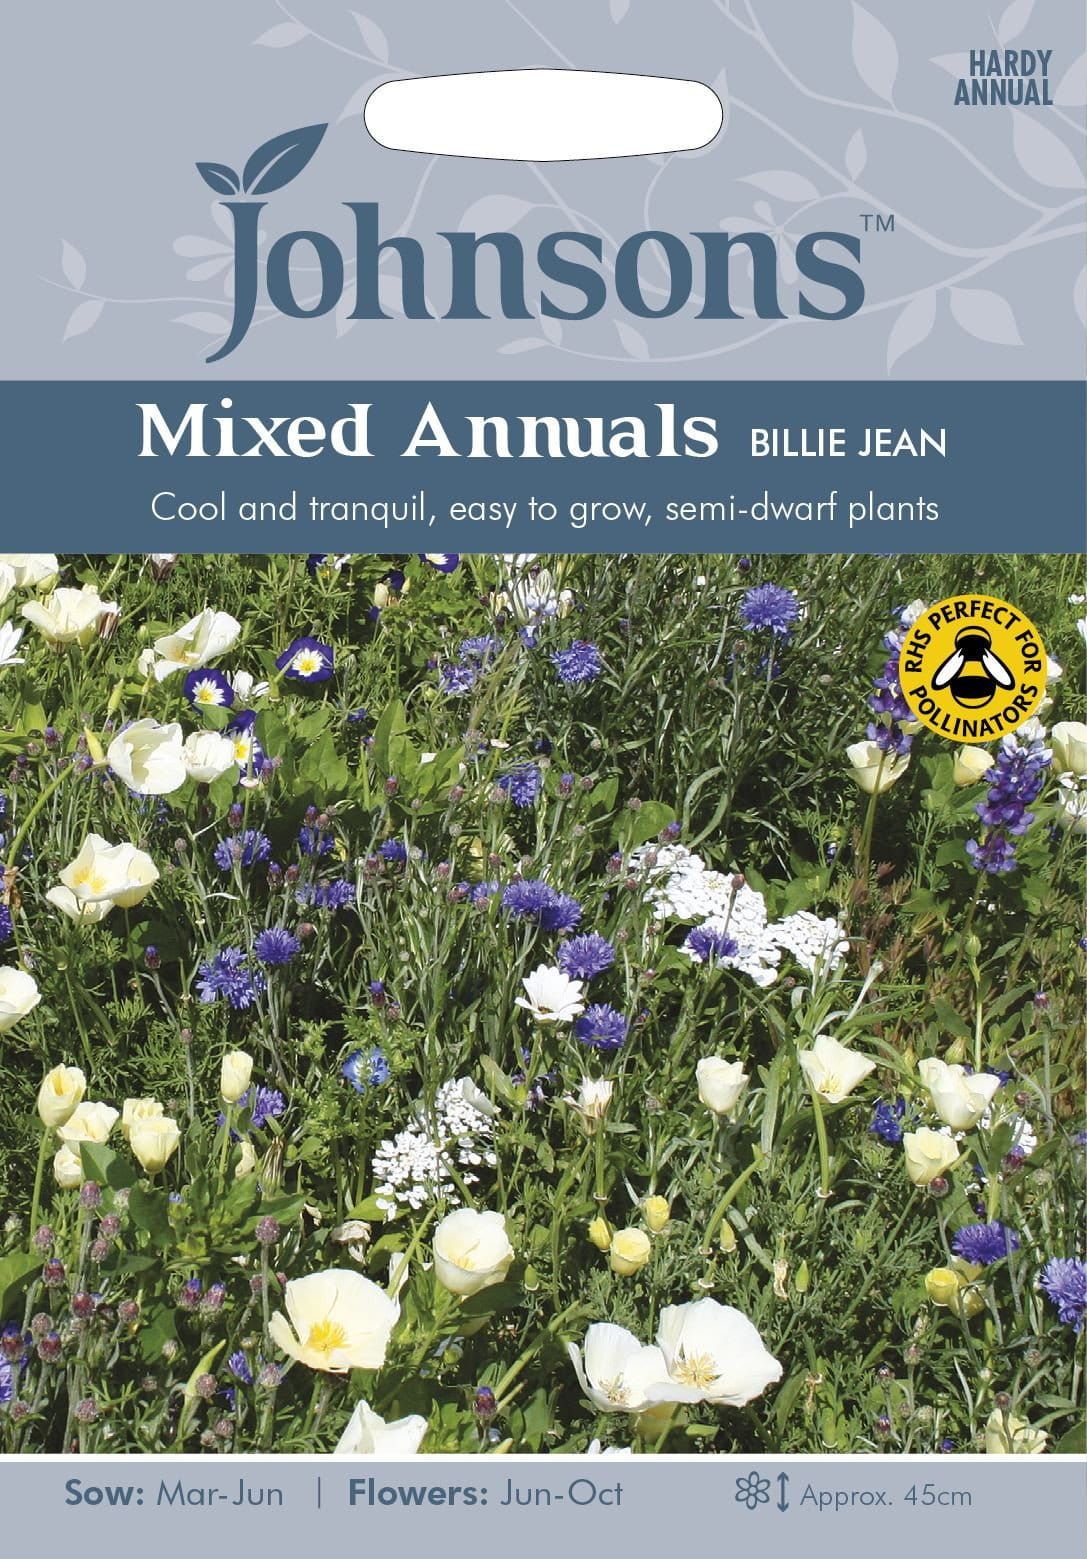 Johnsons Mixed Annuals Billie Jean Seeds